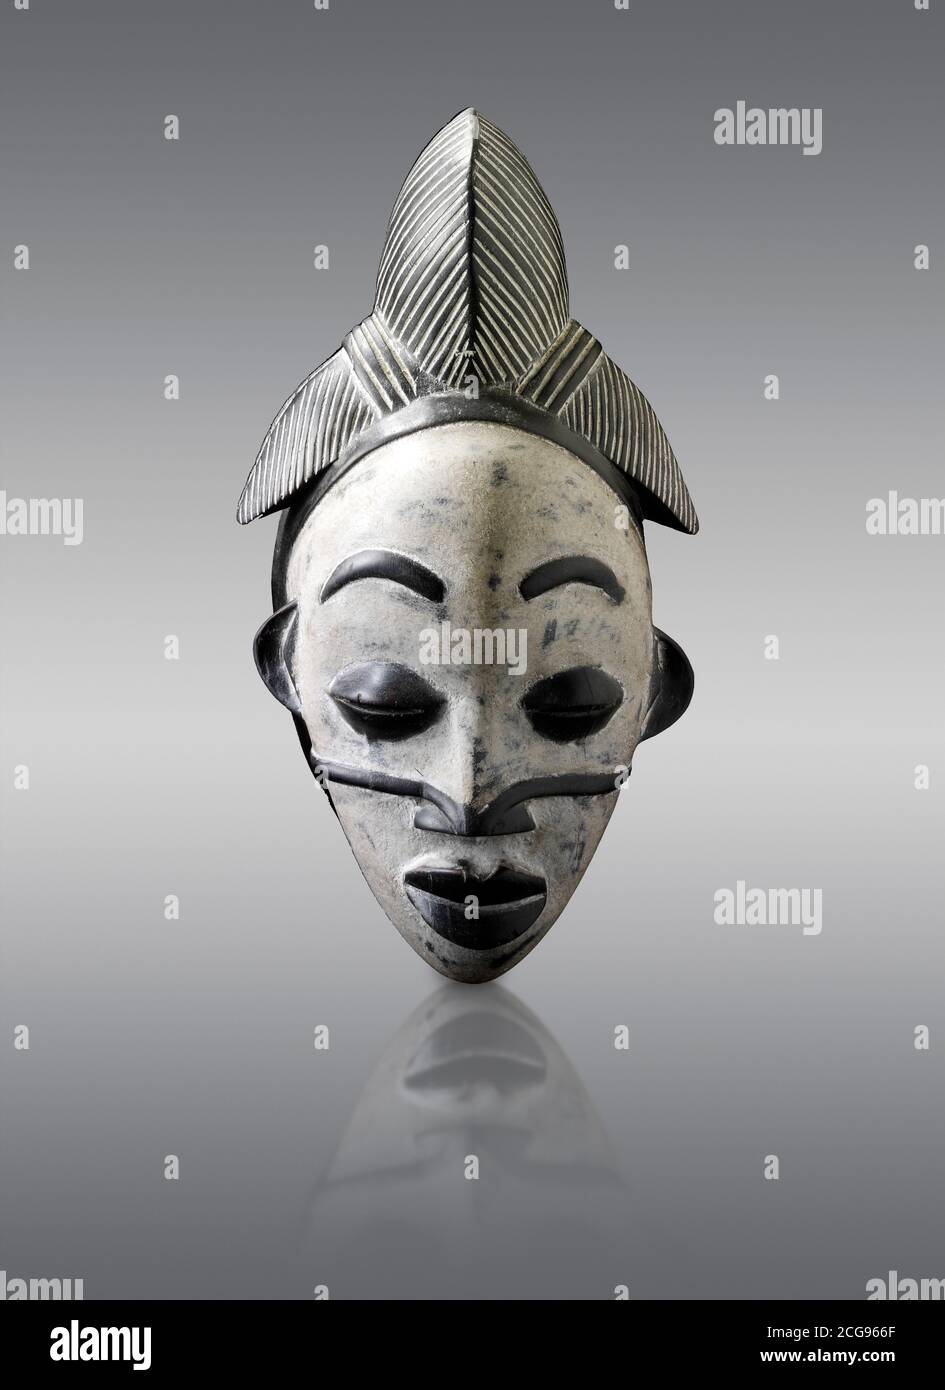 Maschera tribale africana cerimoniale, maschera tribale tradizionale in legno. Foto Stock